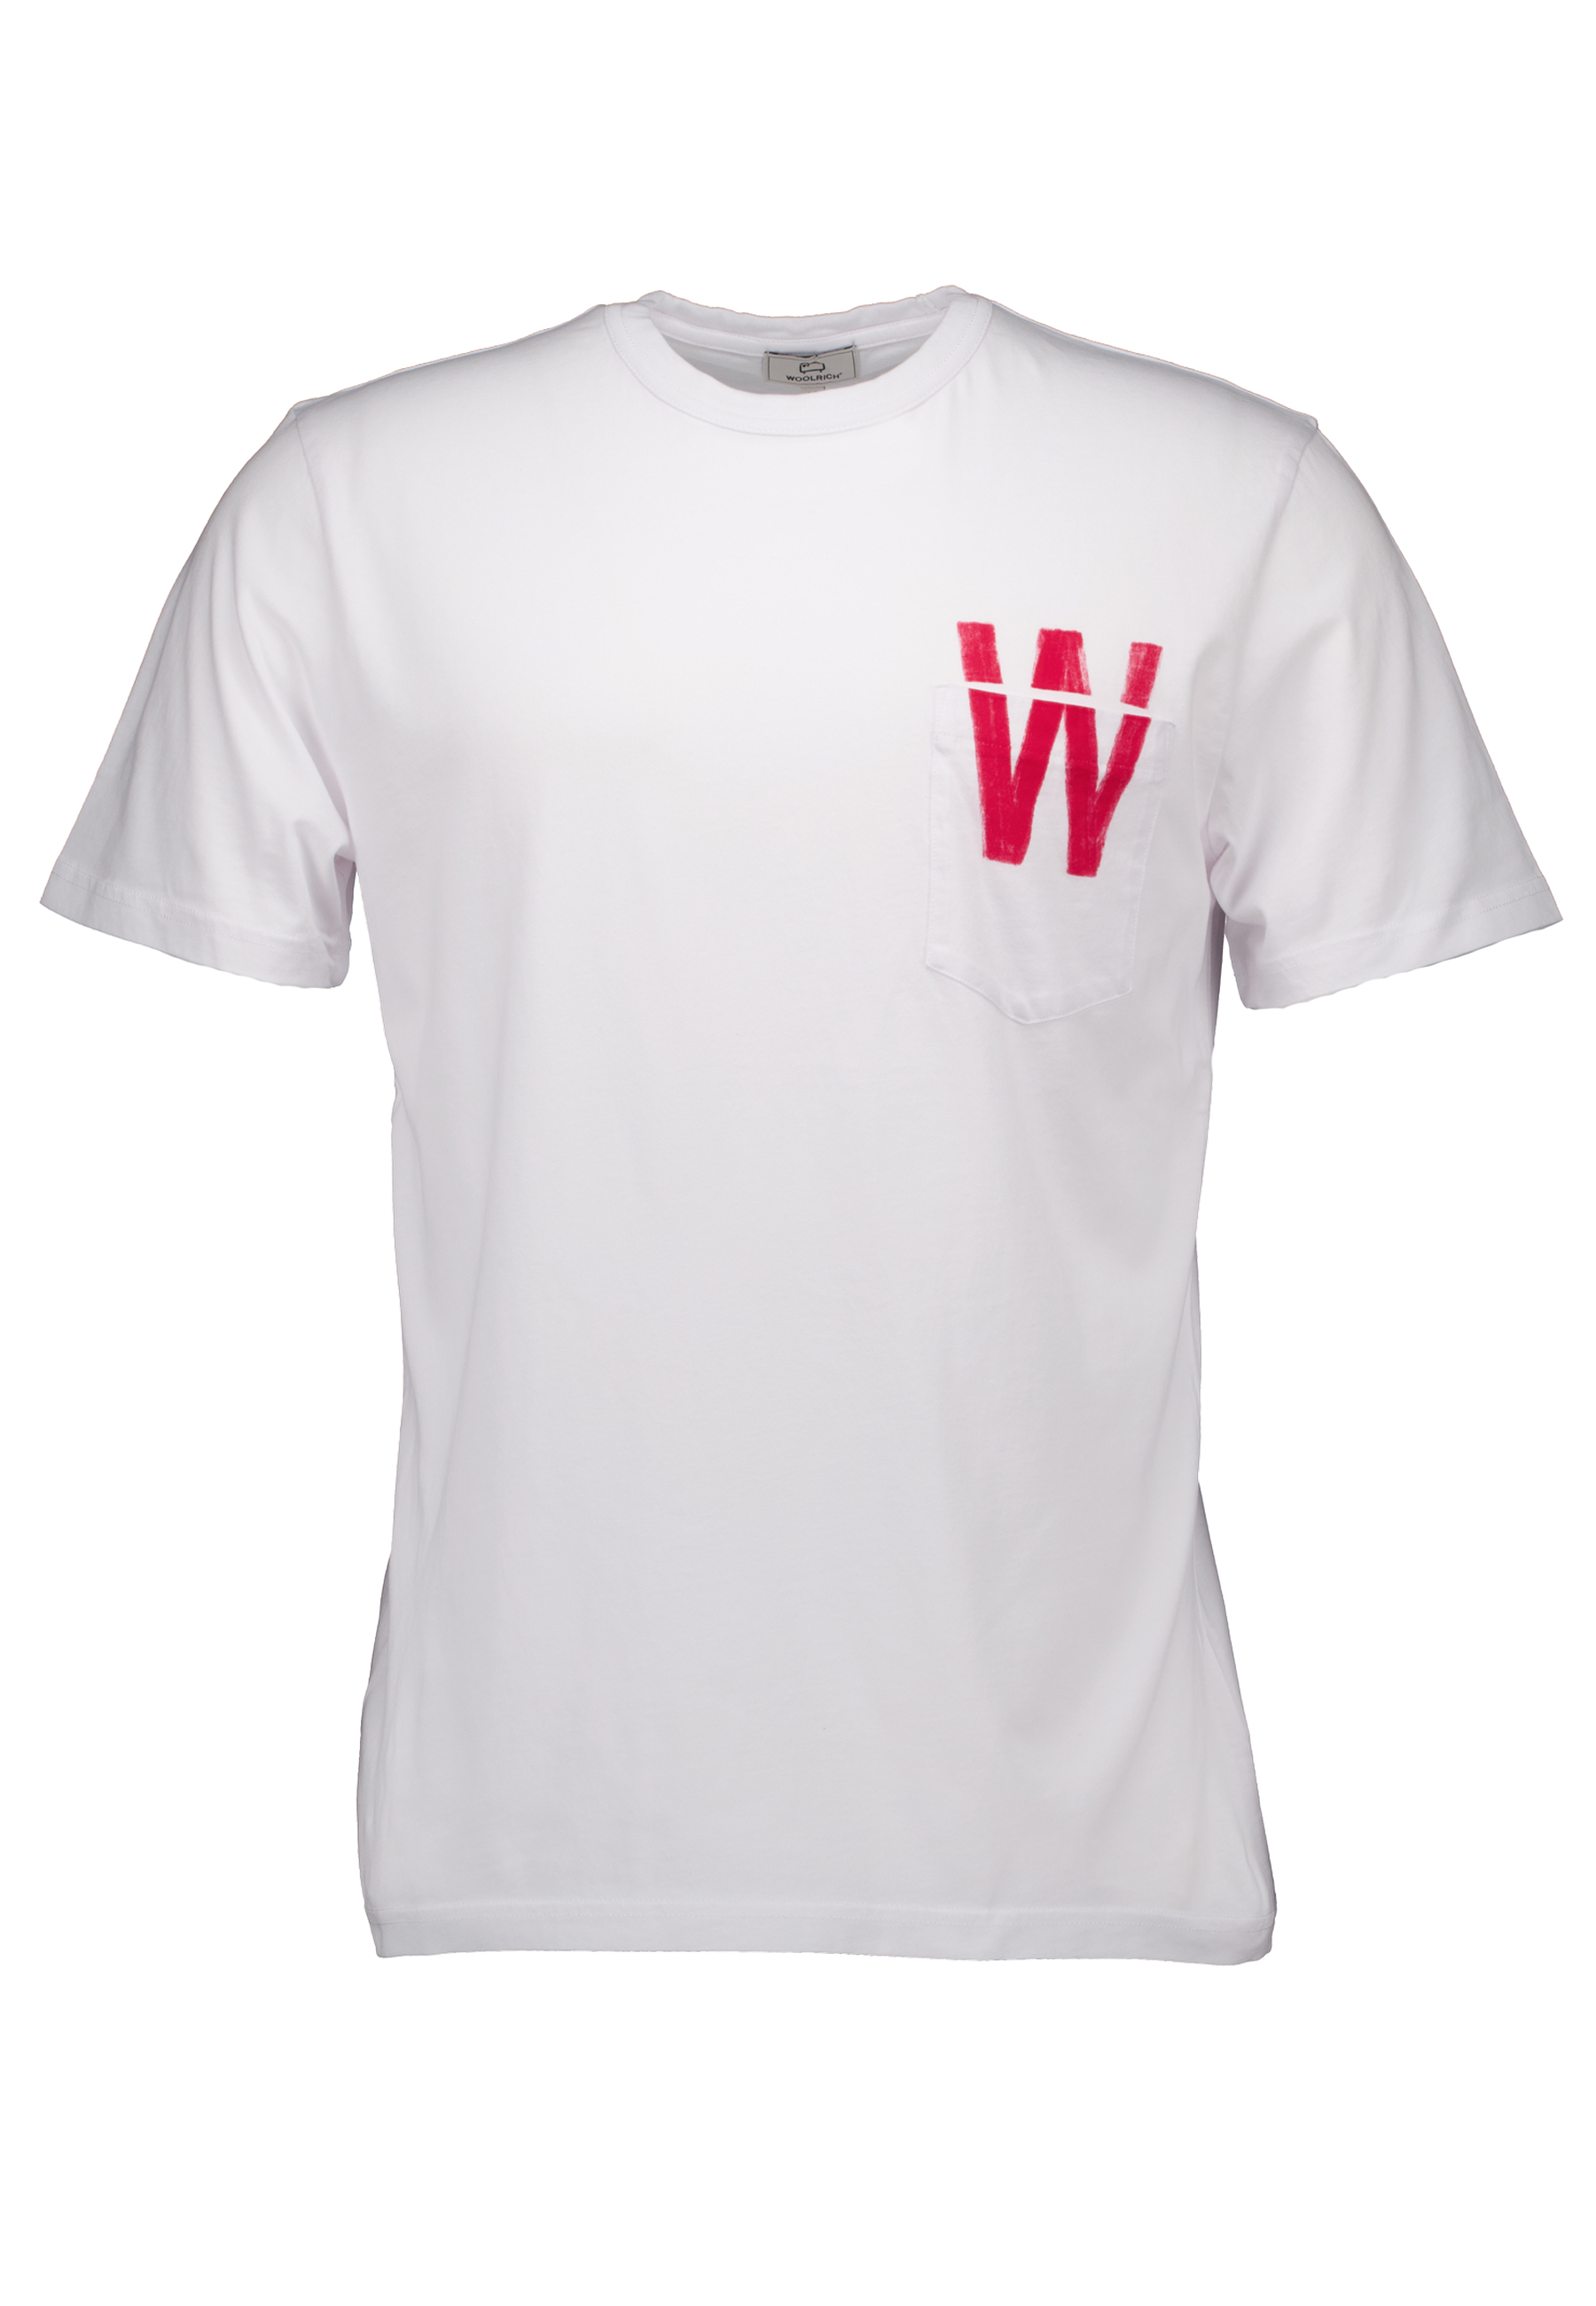 Shirt Wit Flag t-shirts wit